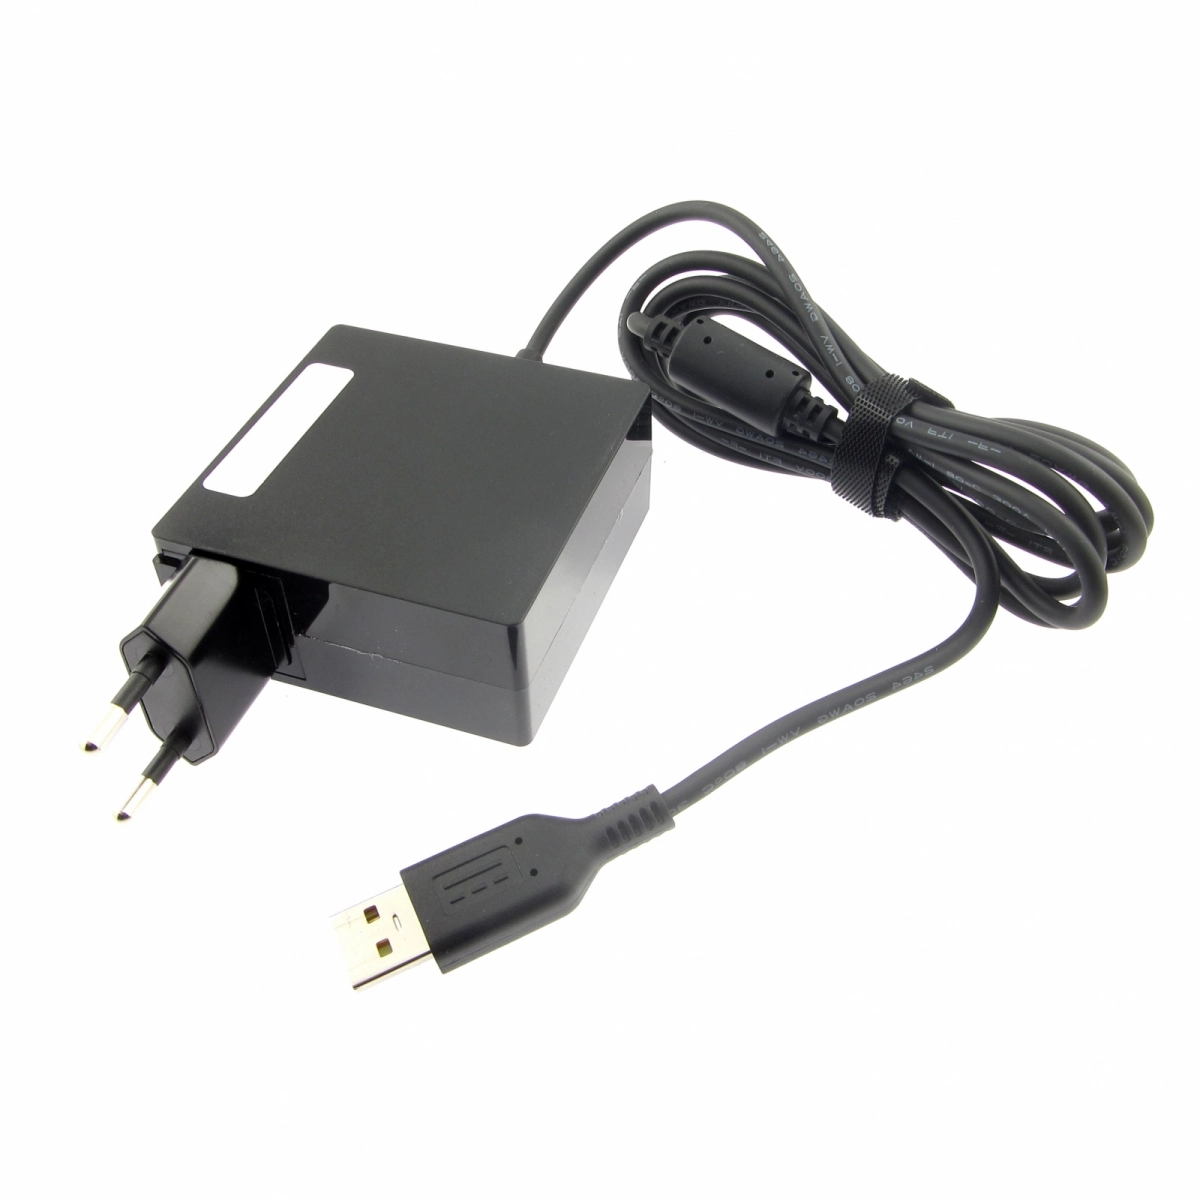 MTXtec Netzteil für LENOVO 36200579, 20/5.2V, 2A, Stecker USB